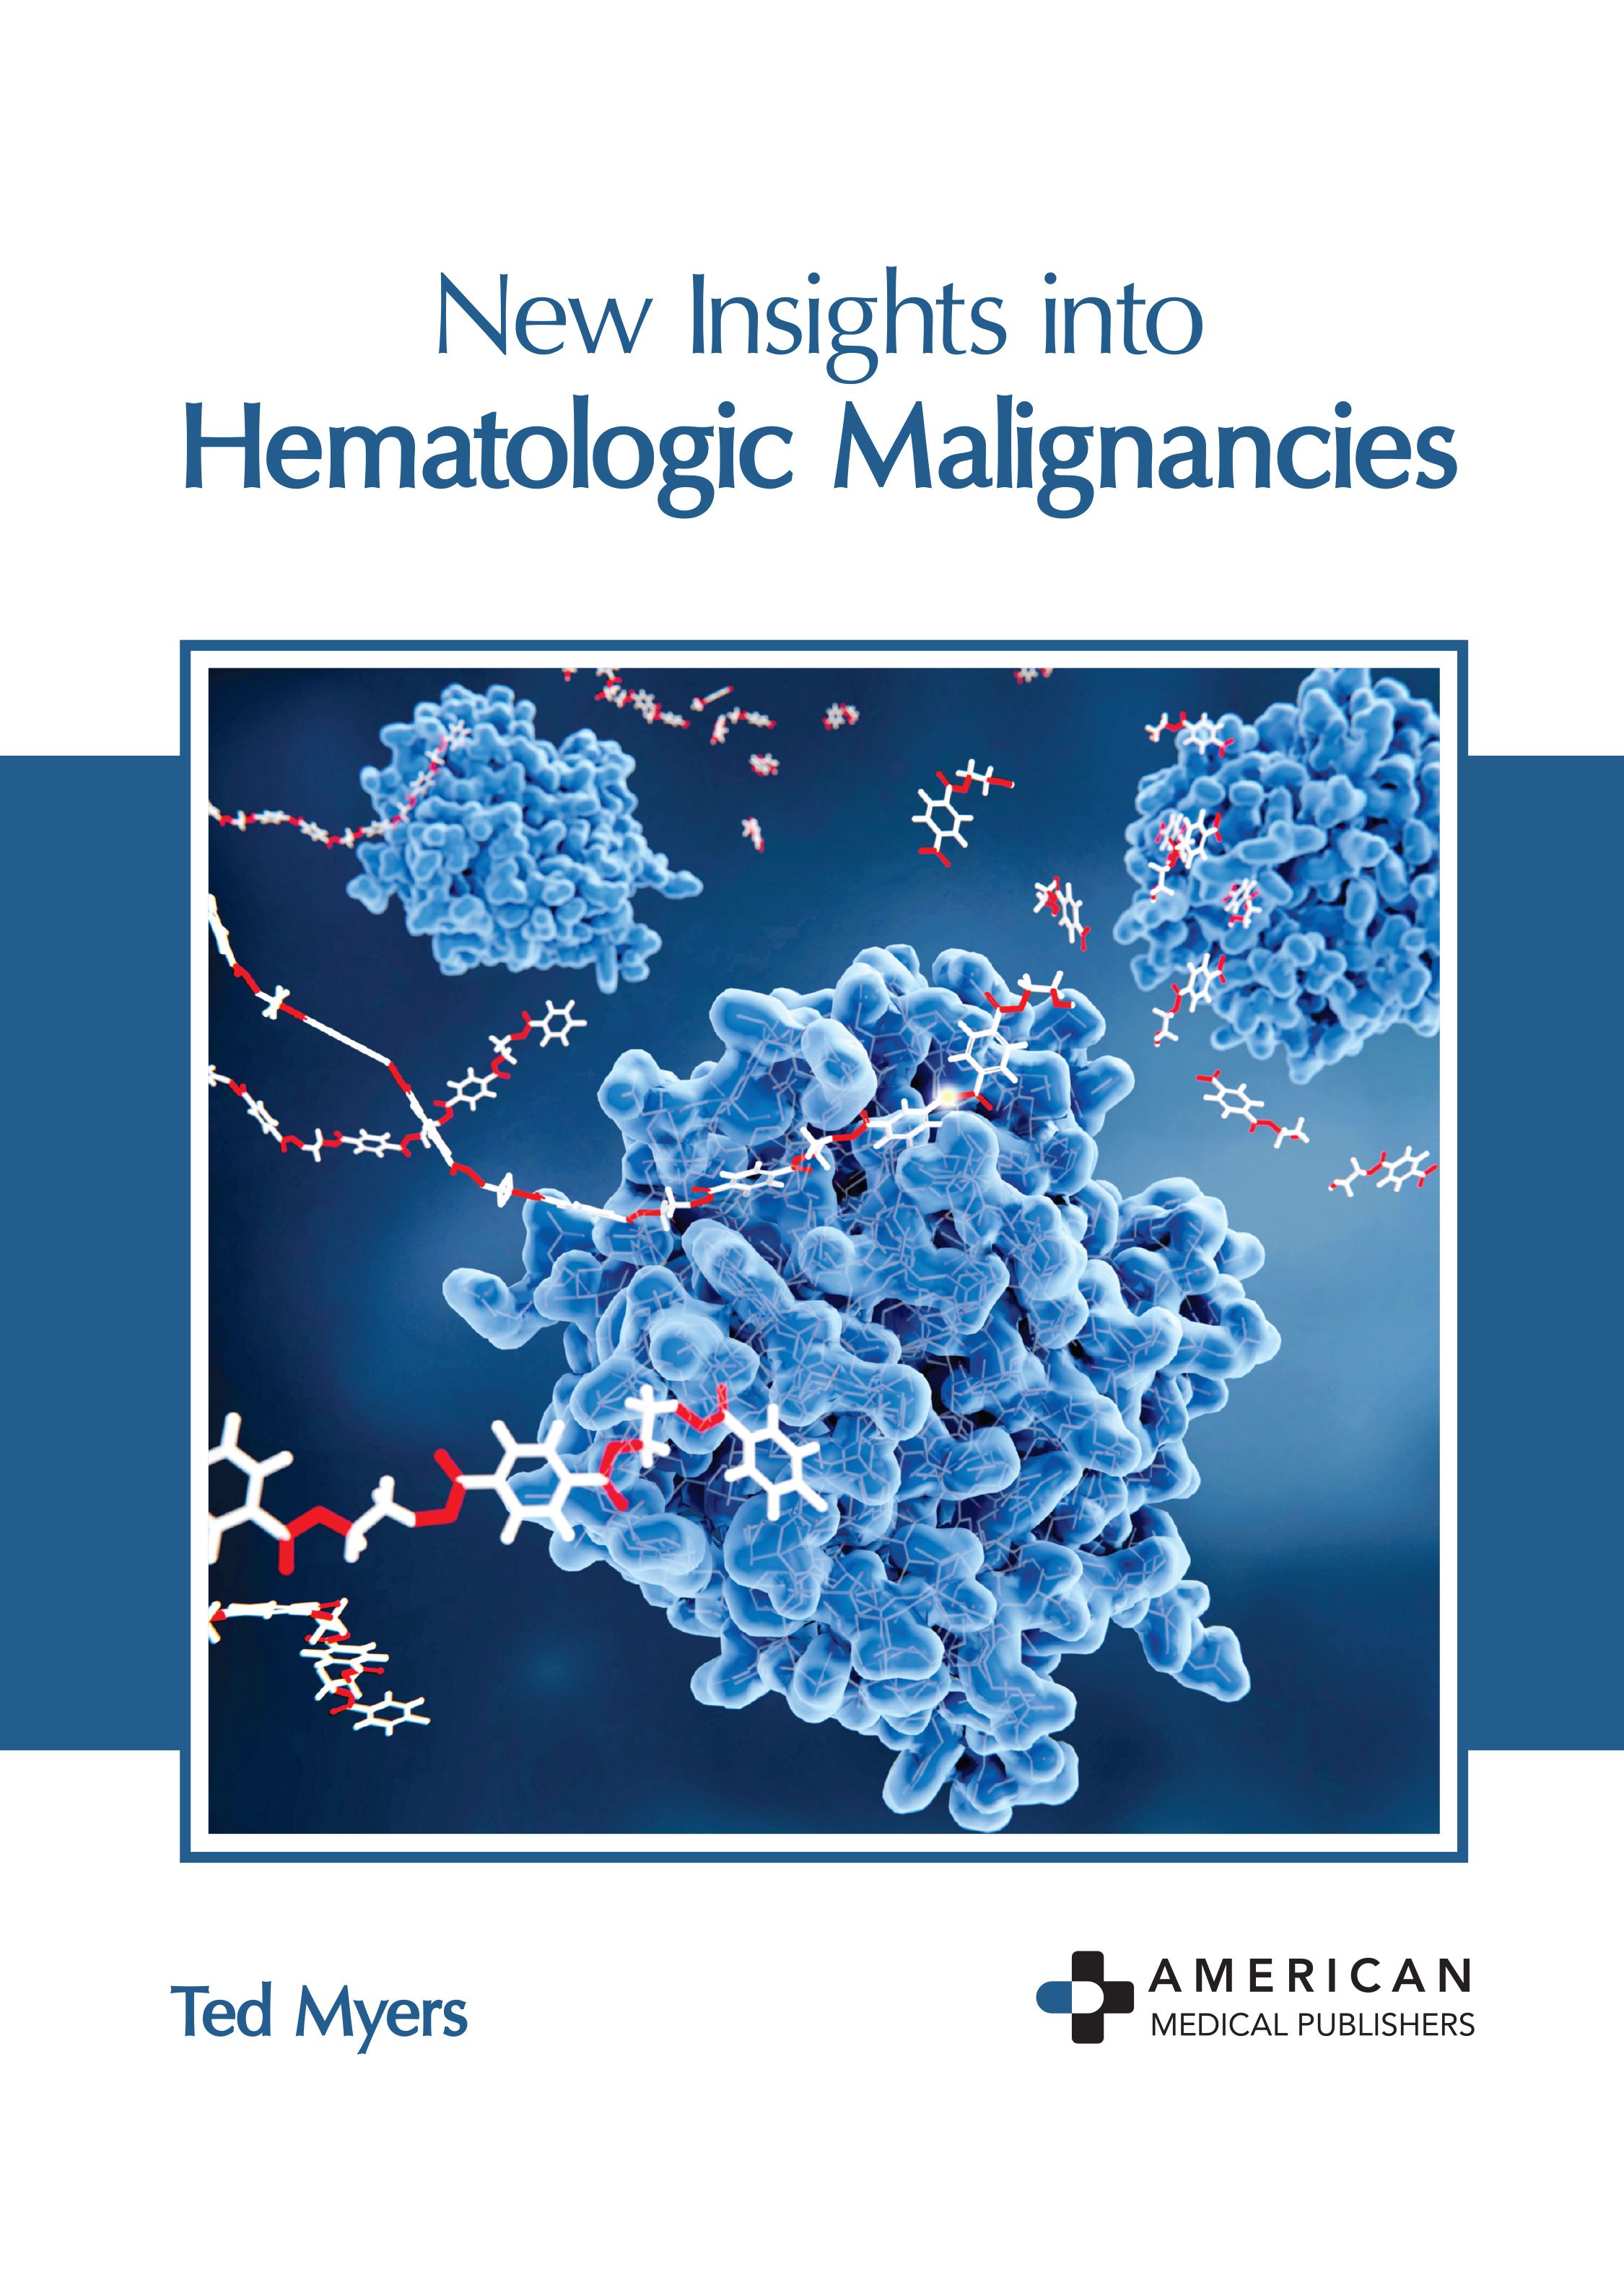 

exclusive-publishers/american-medical-publishers/new-insights-into-hematologic-malignancies-9798887403311